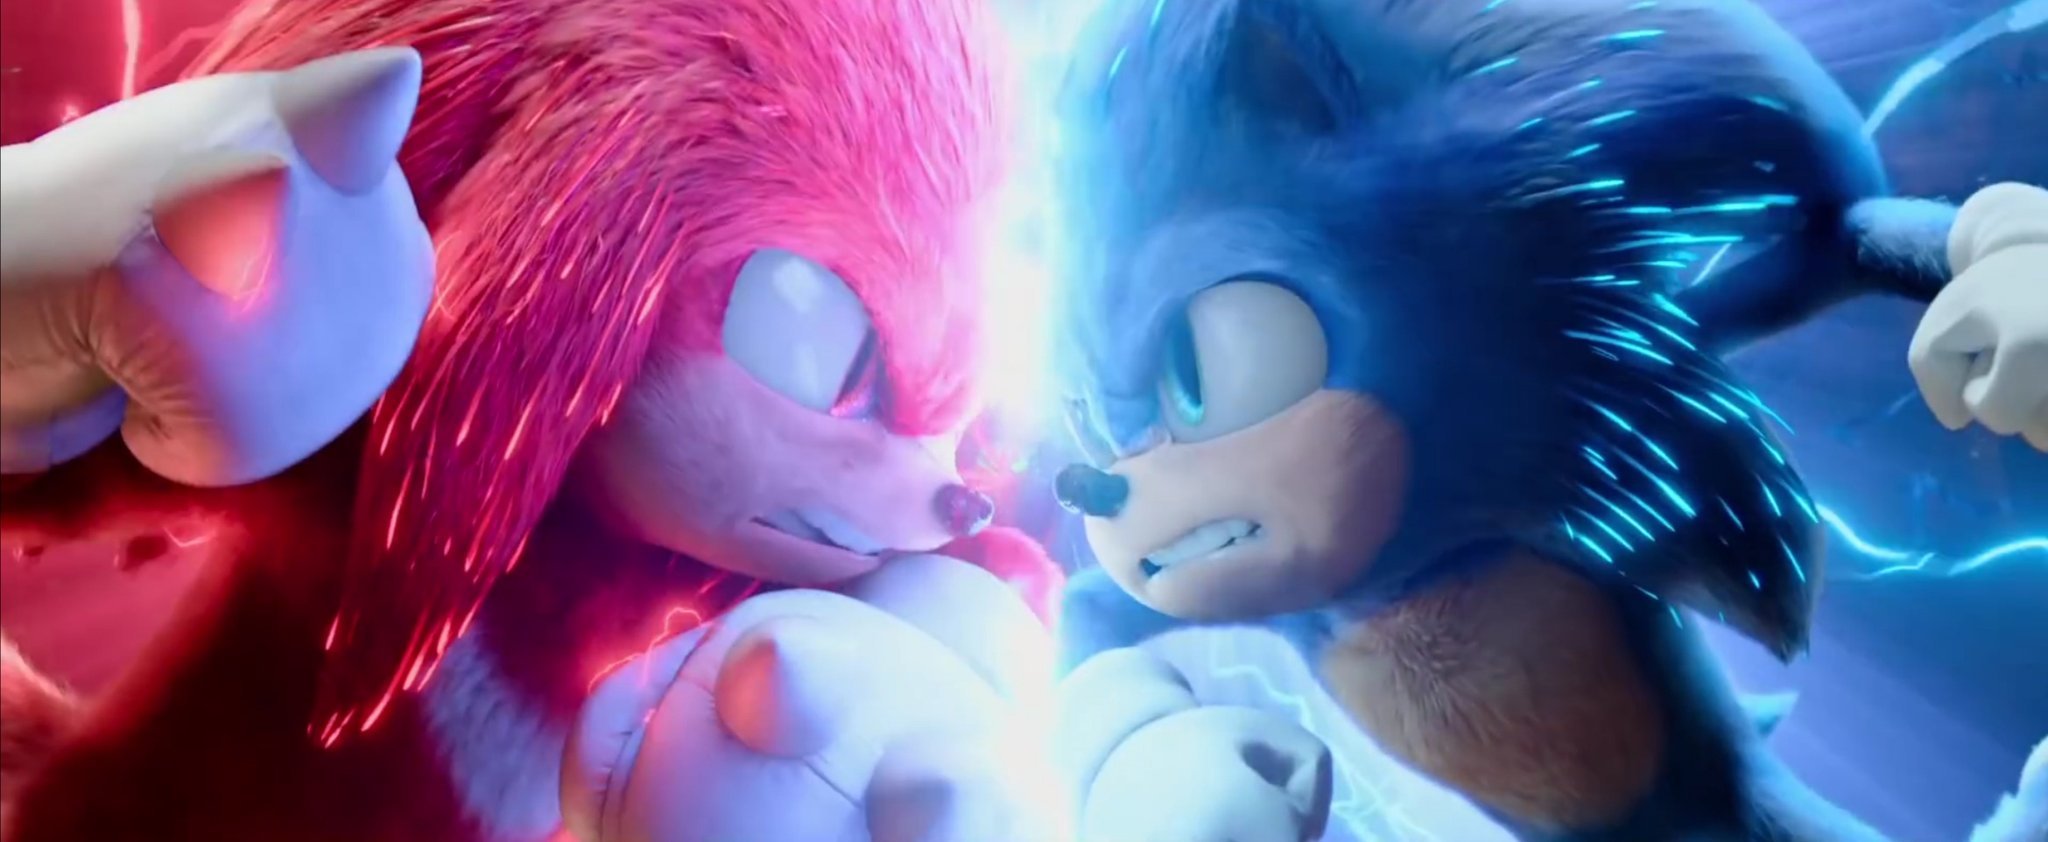 Sonic vs Knuckles the Hedgehog Wallpaper